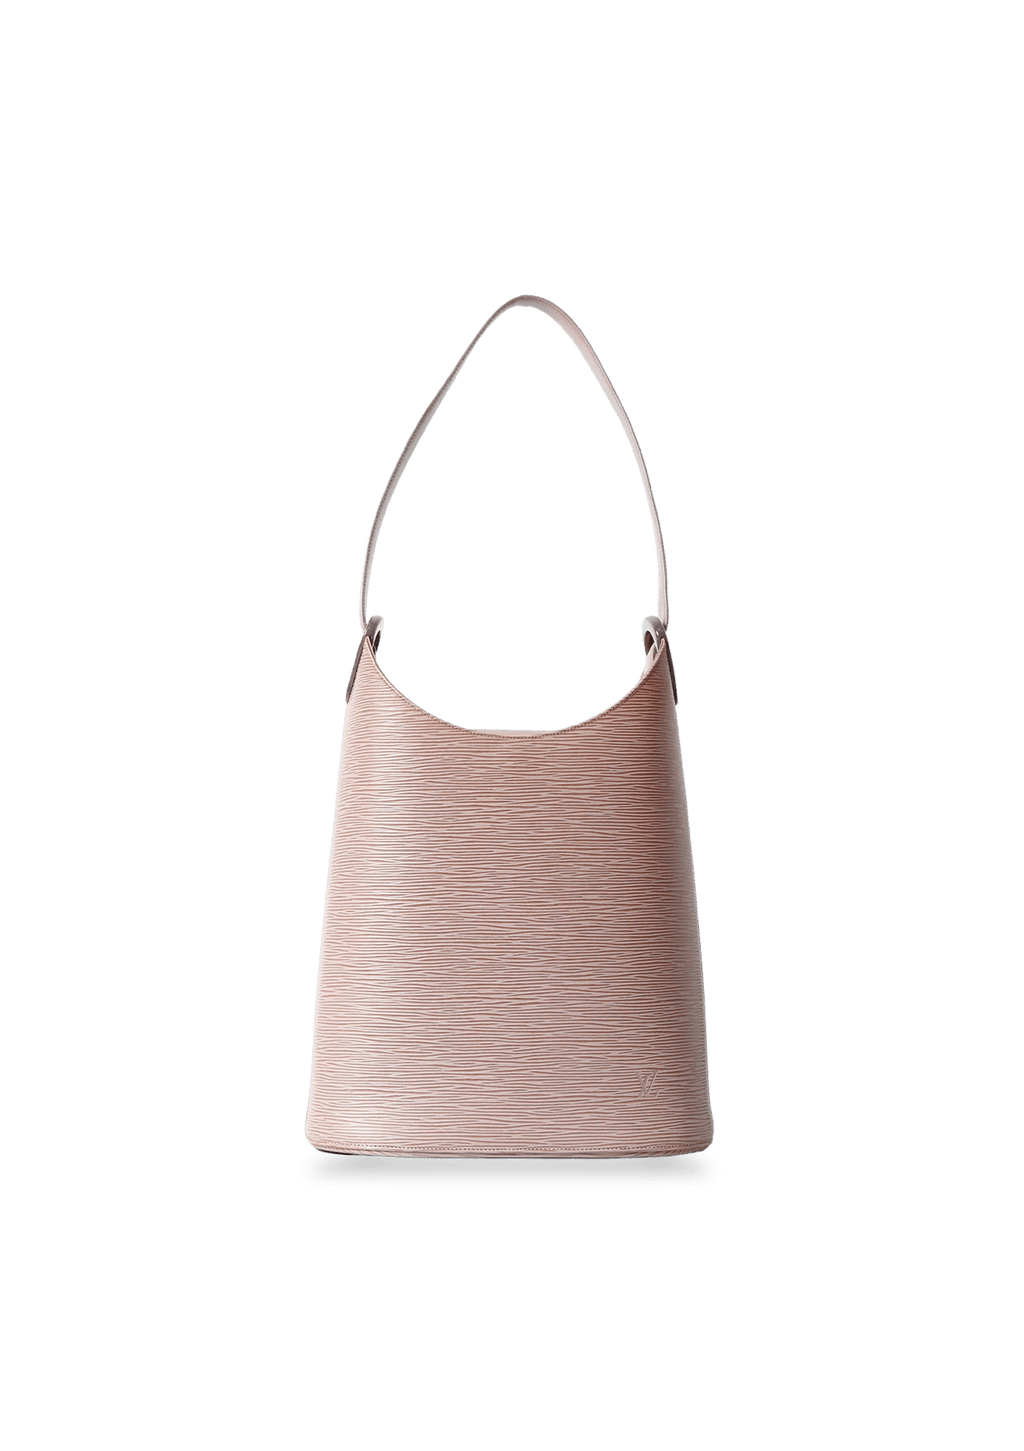 Bolsa Louis Vuitton Epi Sac Verseau Preto Original – Gringa